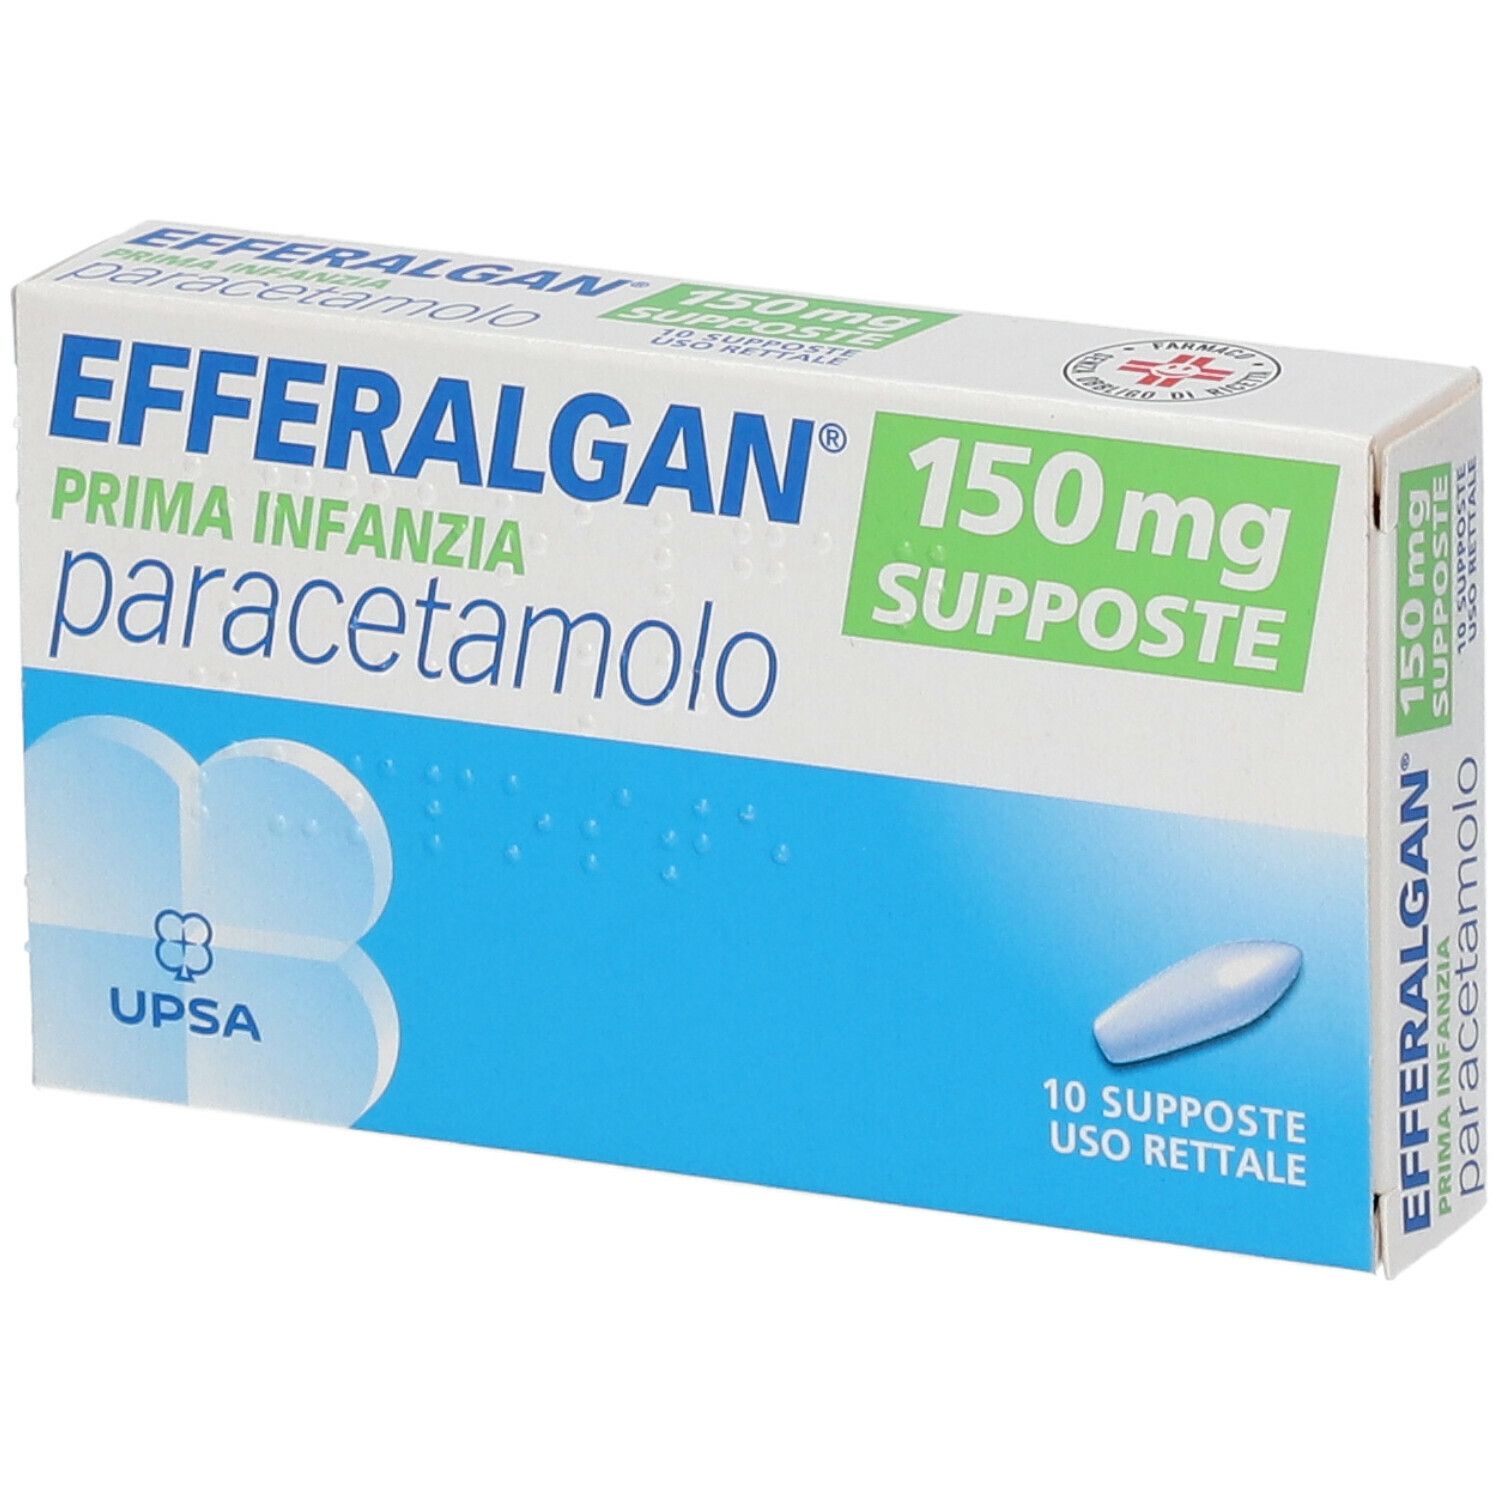 Image of EFFERALGAN® Prima Infanzia 150 mg Supposte